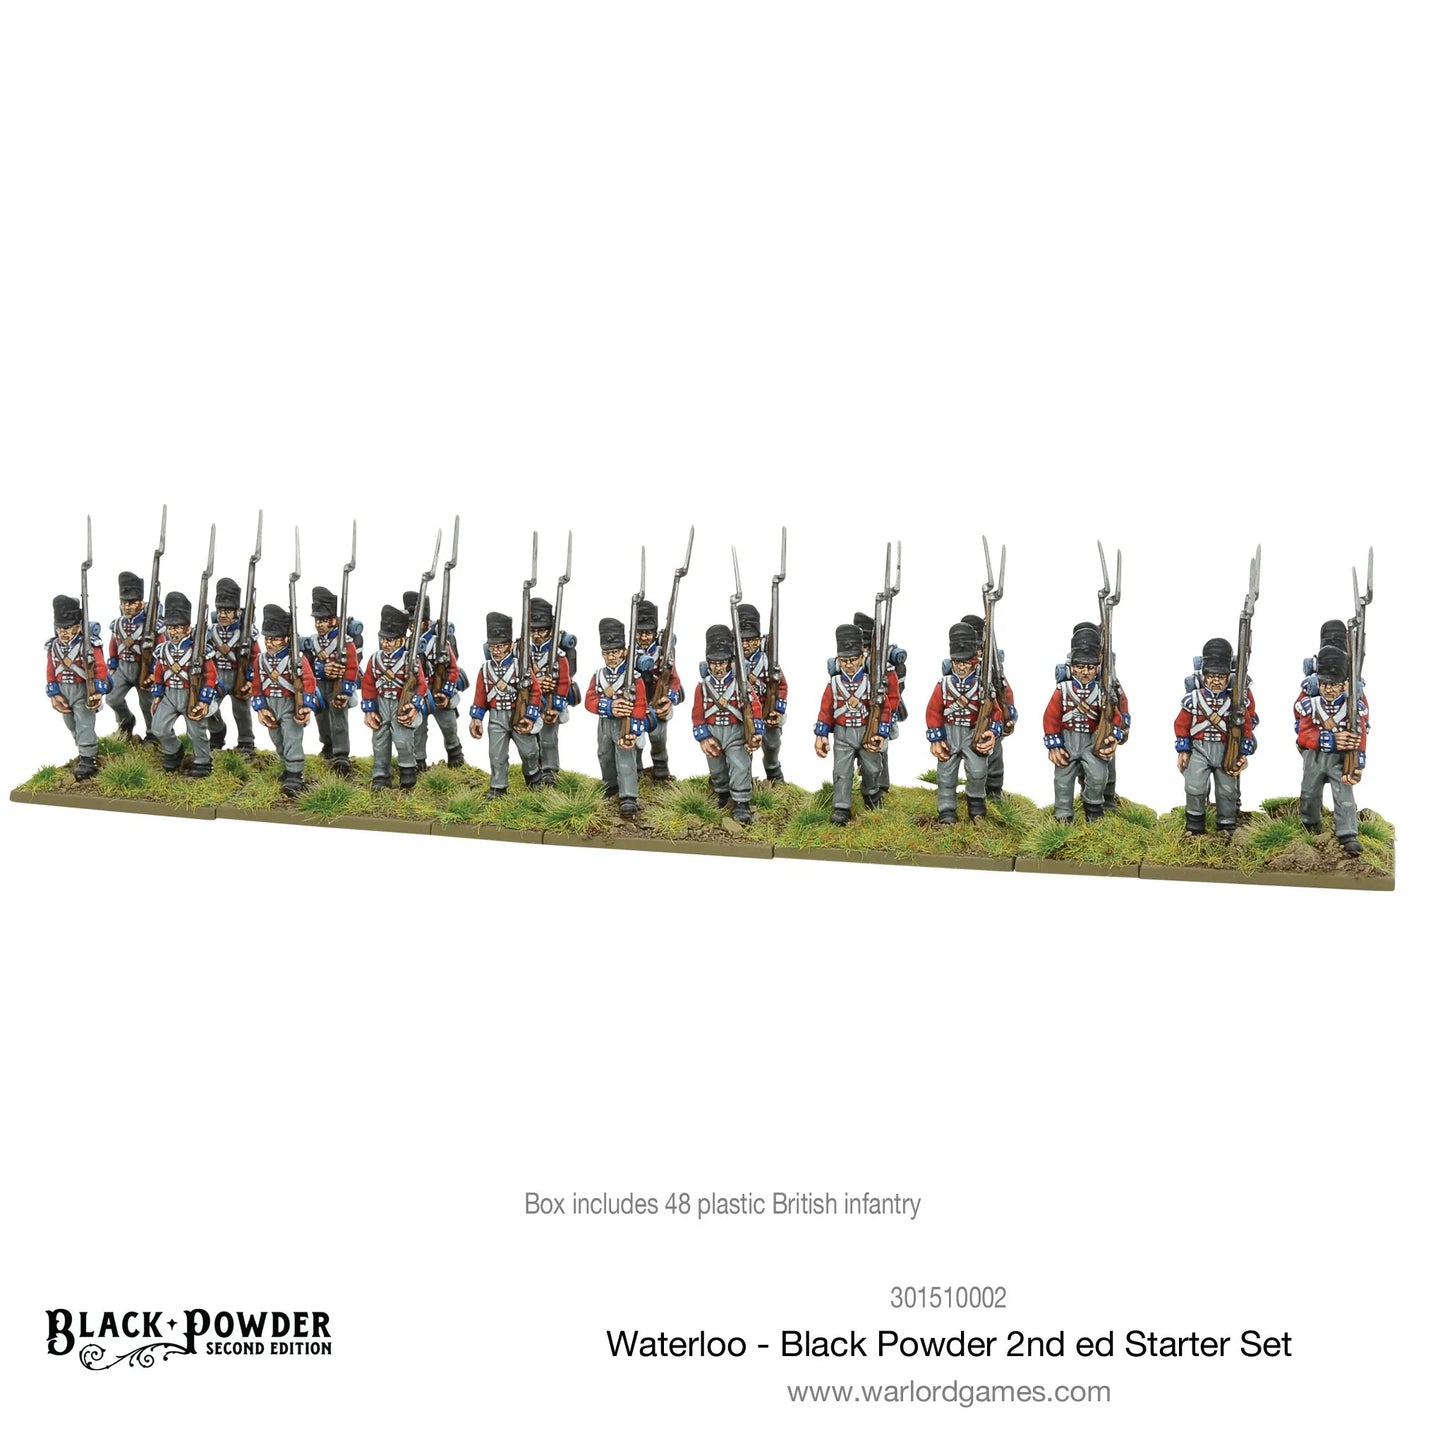 Waterloo - Black Powder 2nd edition Starter Set (German Edition) - 301530002